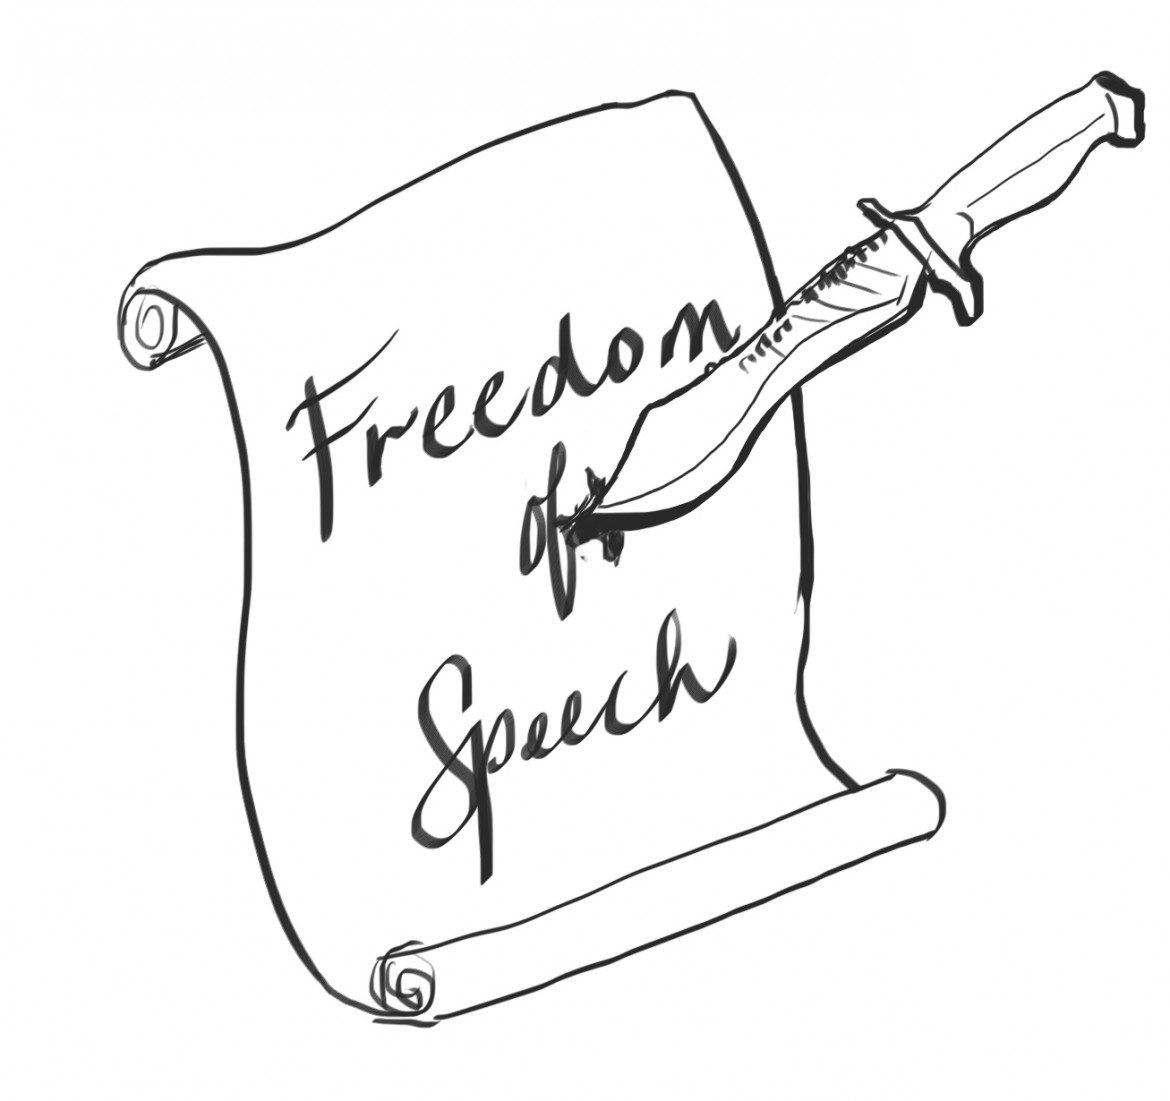 Freedom+of+Speech+illustration